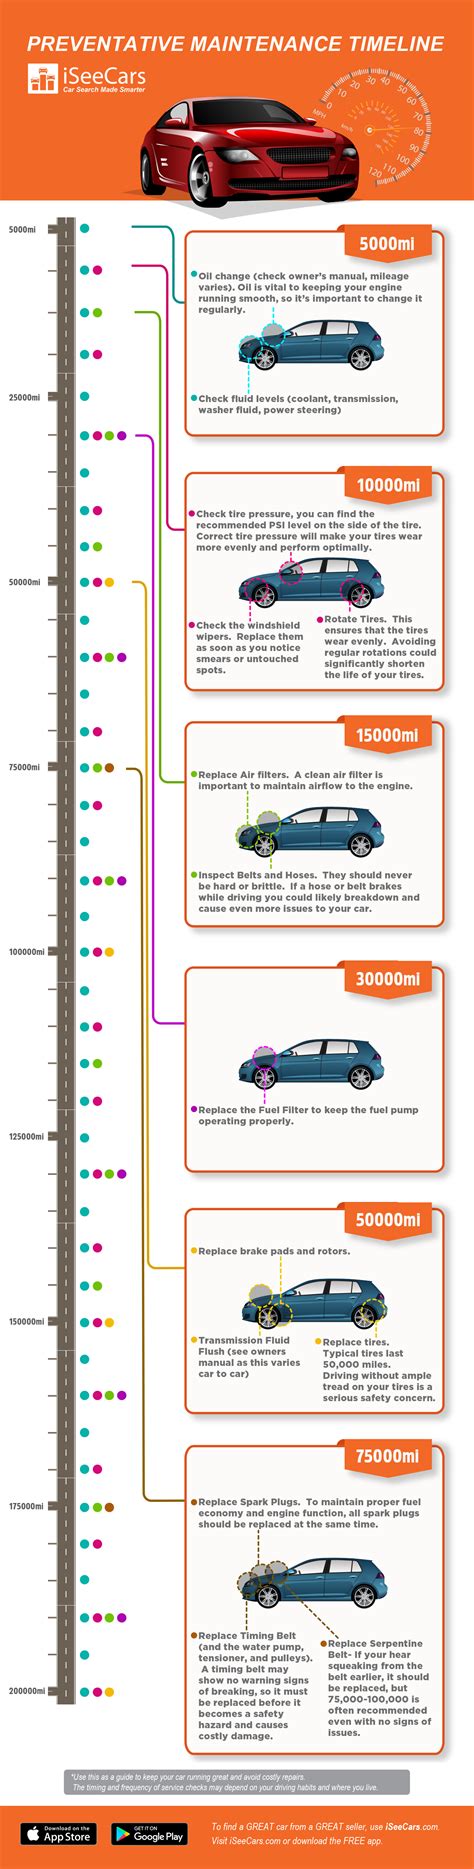 Best Preventative Maintenance Timeline For Your Car